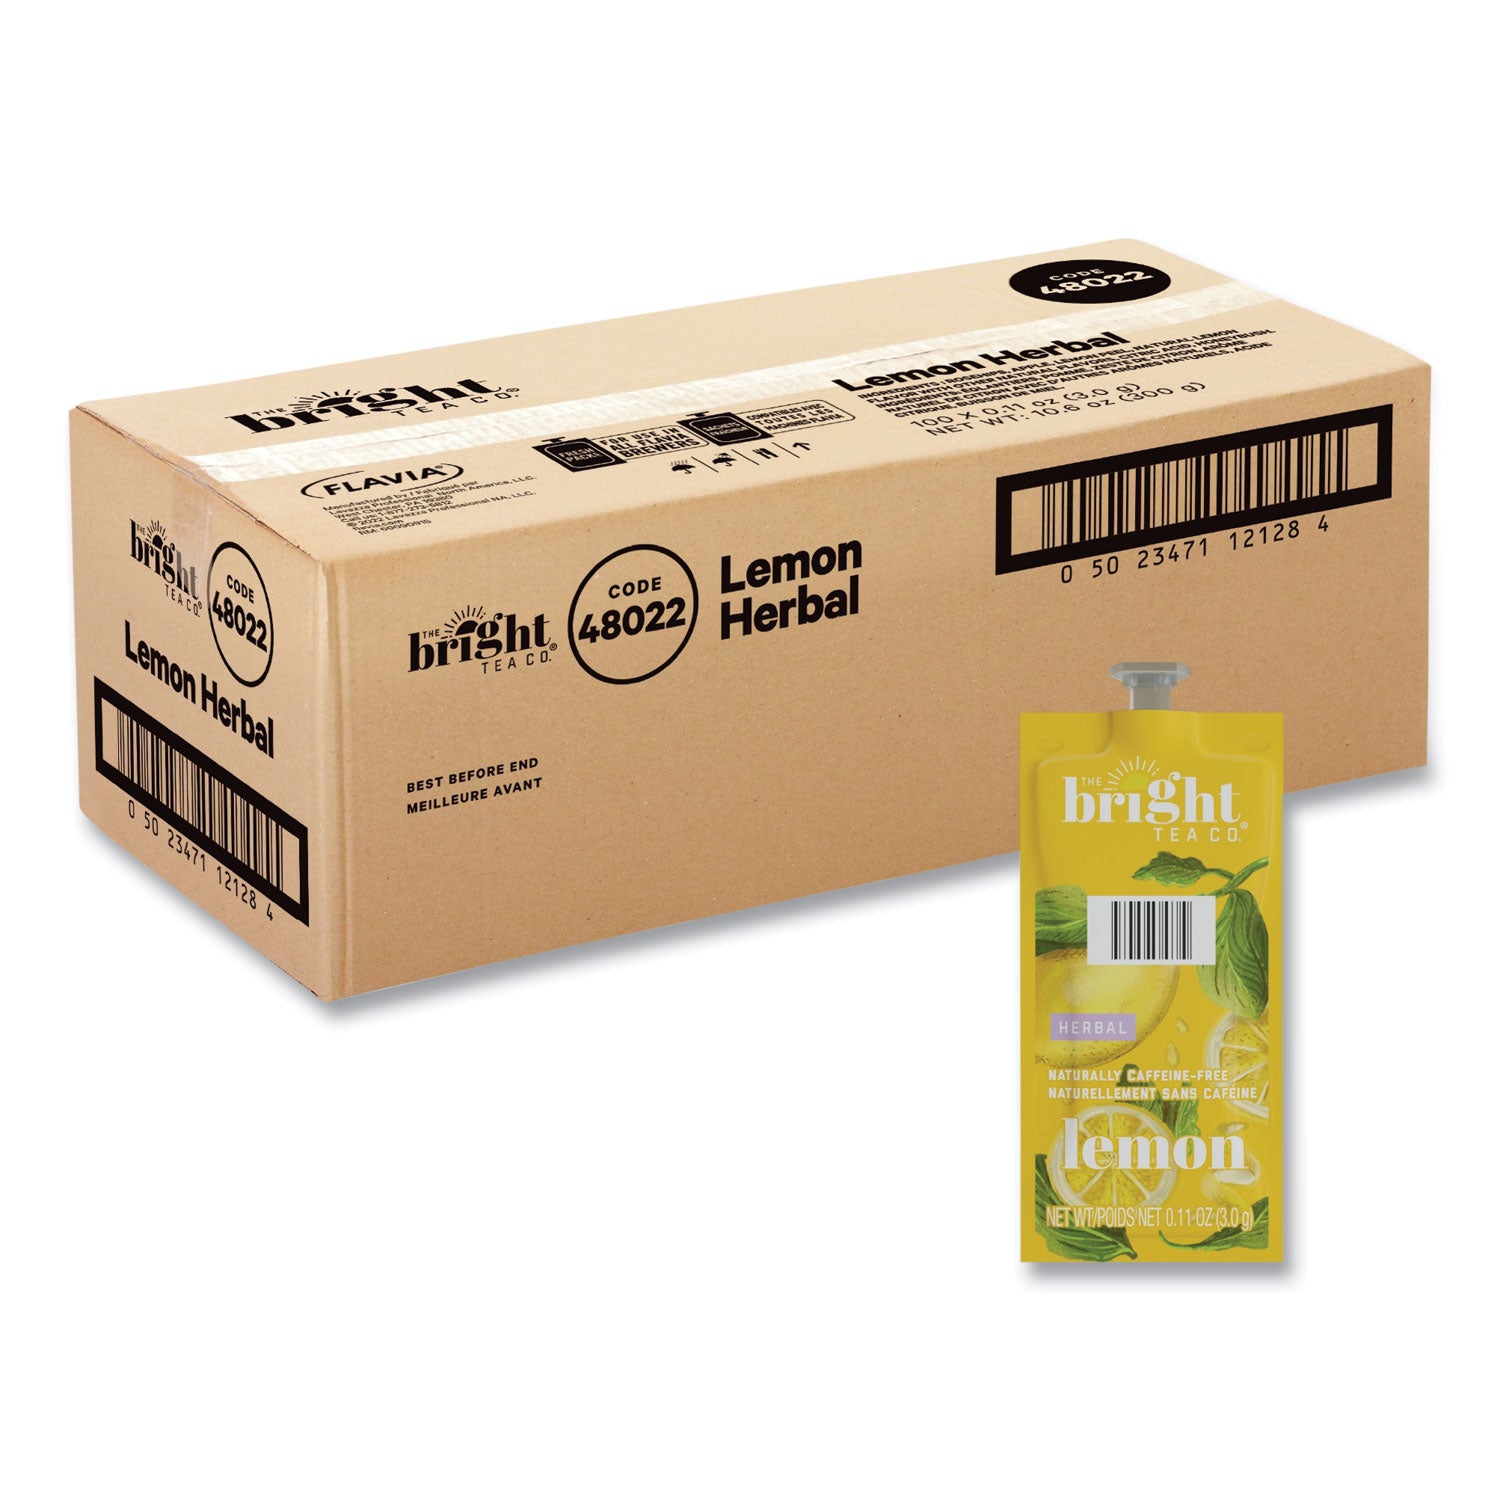 the-bright-tea-co-lemon-herbal-tea-freshpack-lemon-011-oz-pouch-100-carton_lav48022 - 1